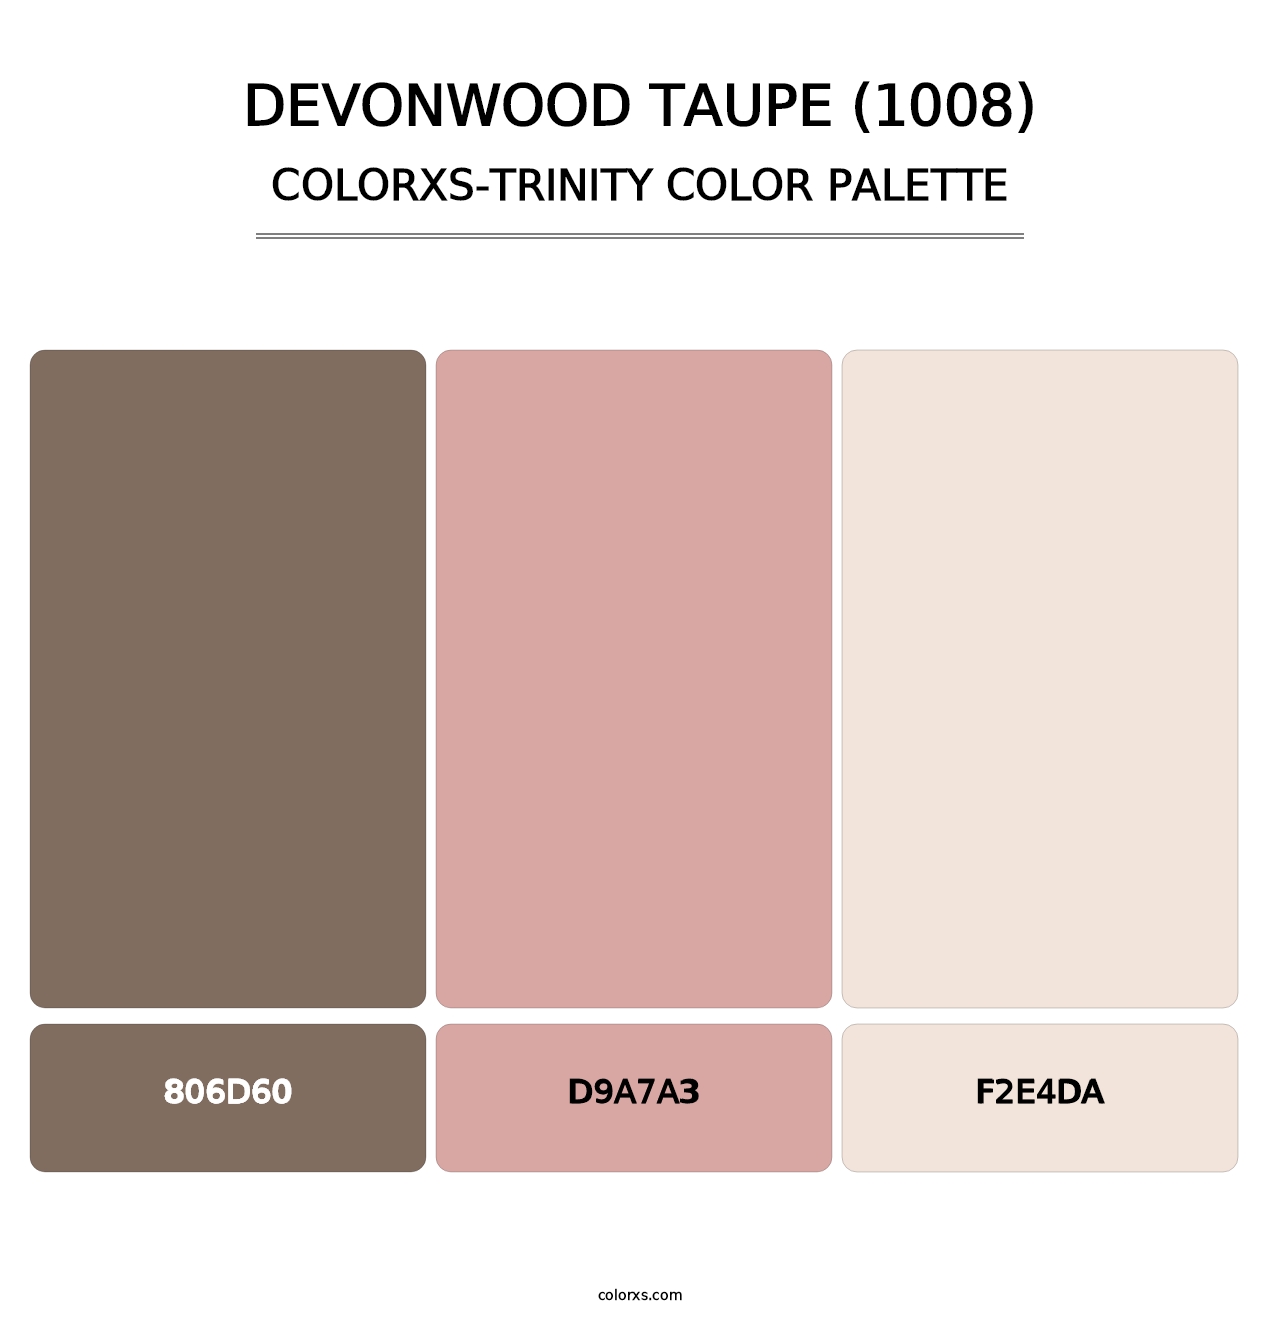 Devonwood Taupe (1008) - Colorxs Trinity Palette